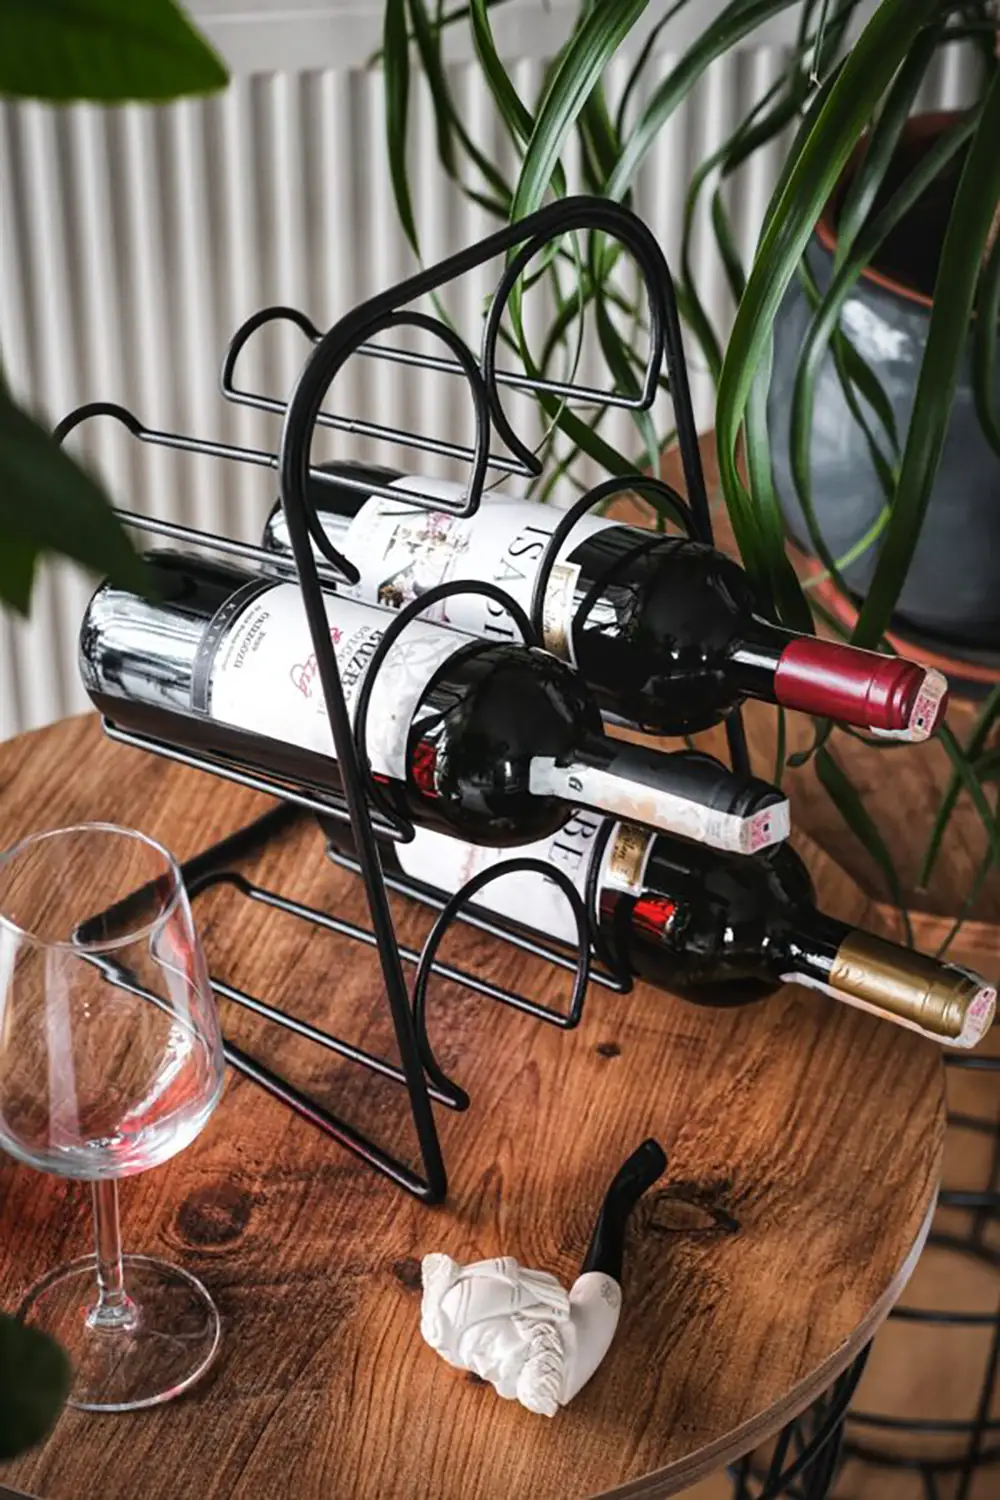 Decorative Wire Wine Rack (6 Shelves)